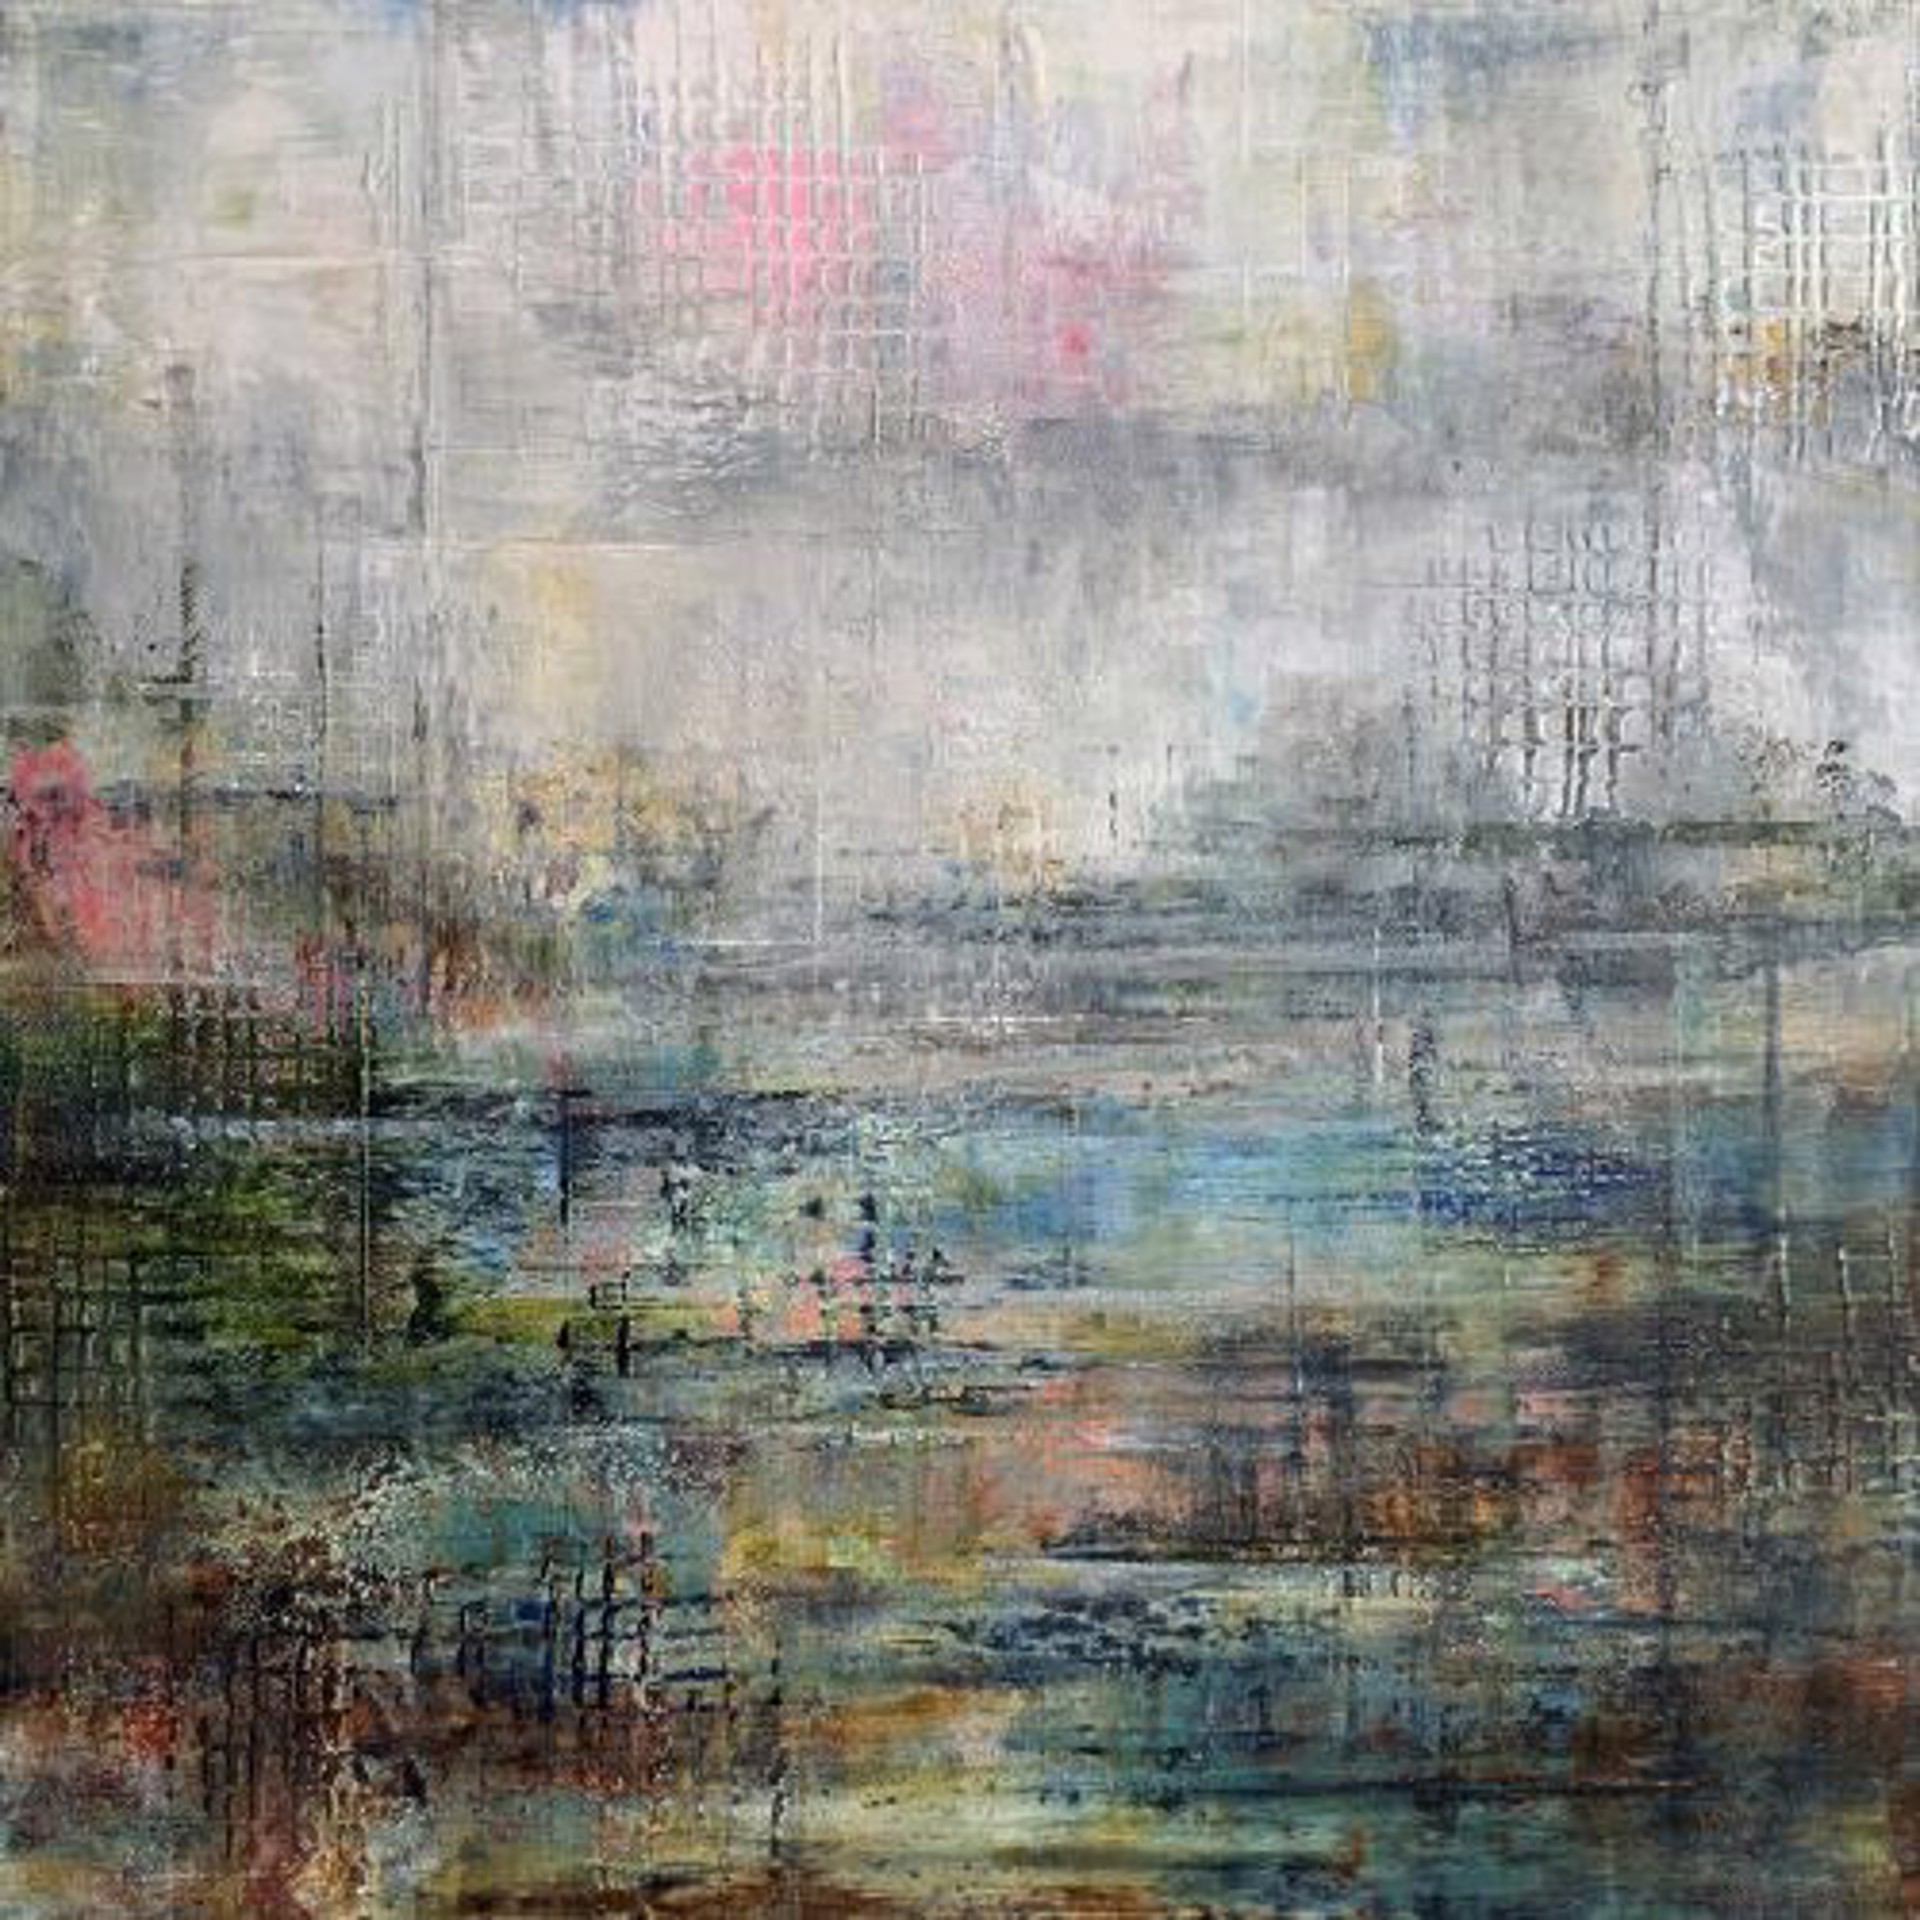 City in the Fog by Stephanie Thwaites